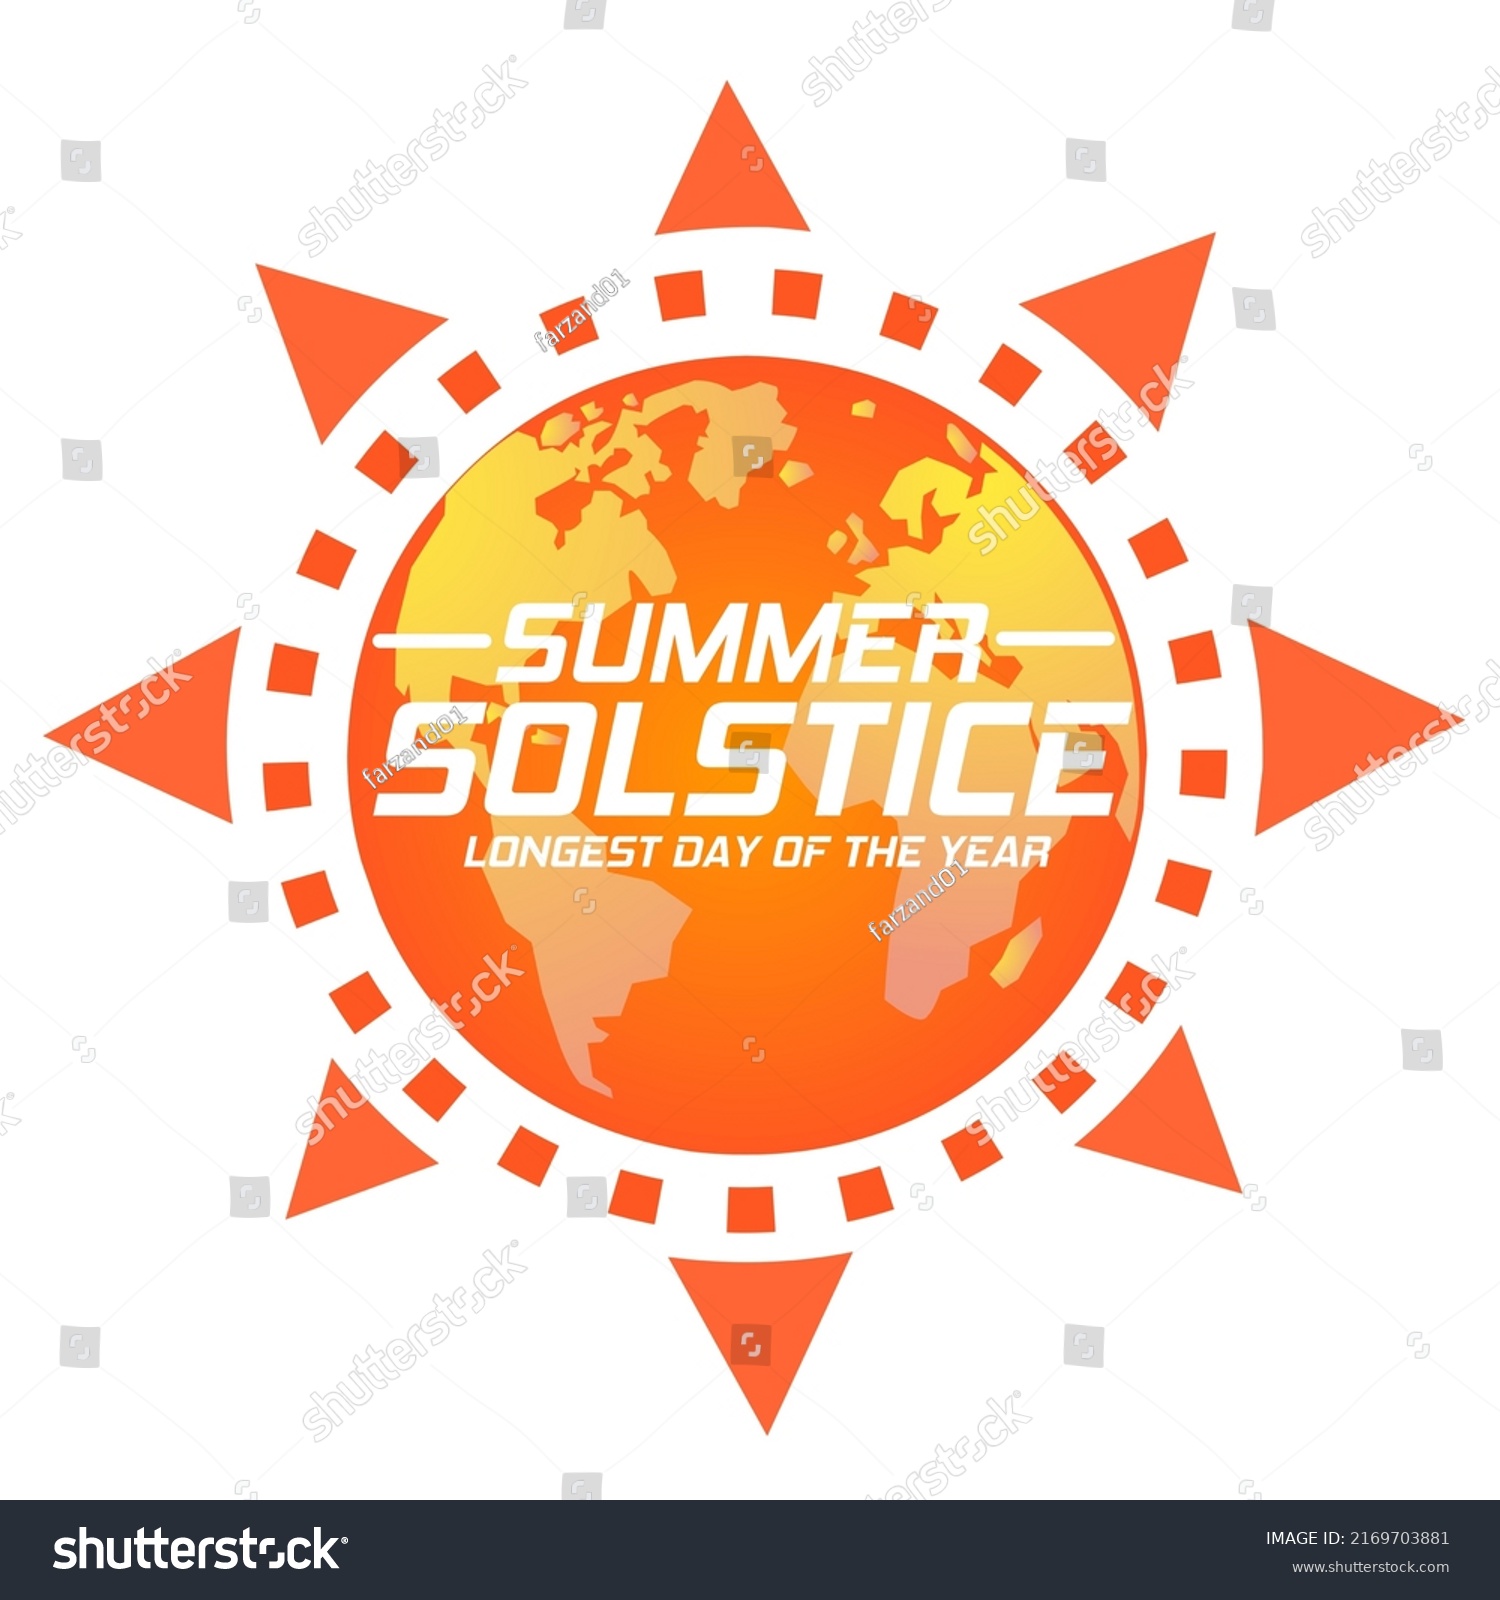 Summer Solstice Longest Day Year Vector Stock Vector Royalty Free 2169703881 Shutterstock